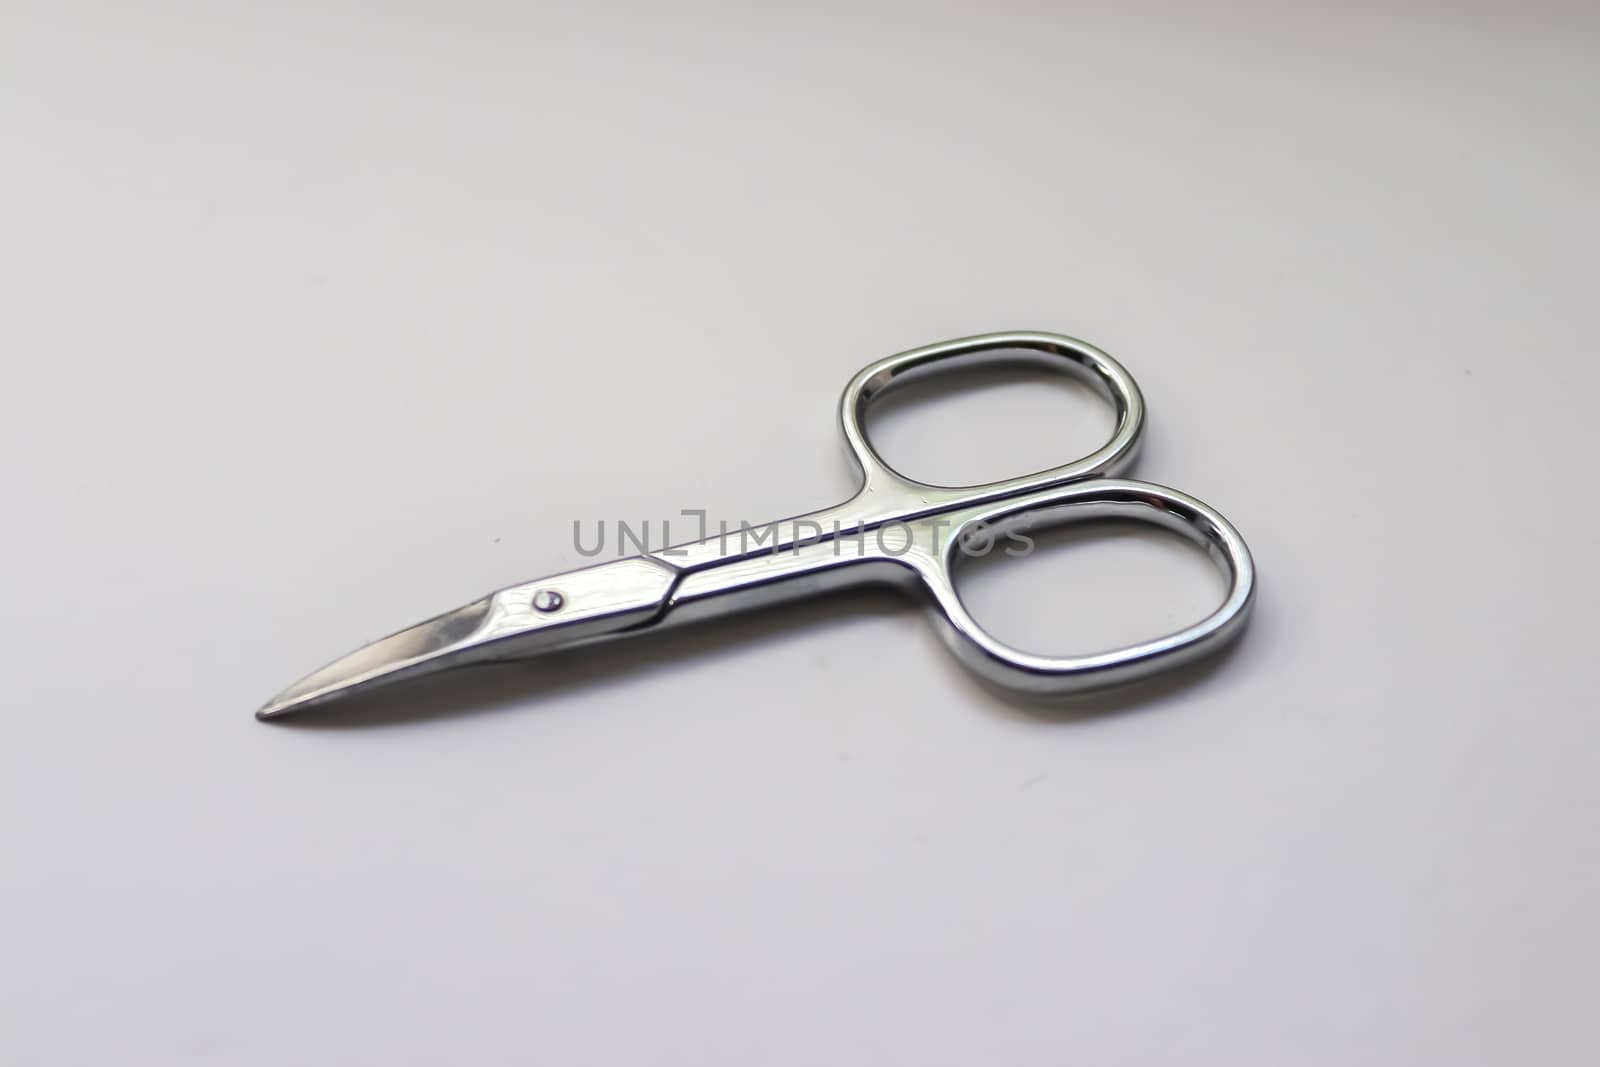 manicure scissors closeup on white background. by MP_foto71